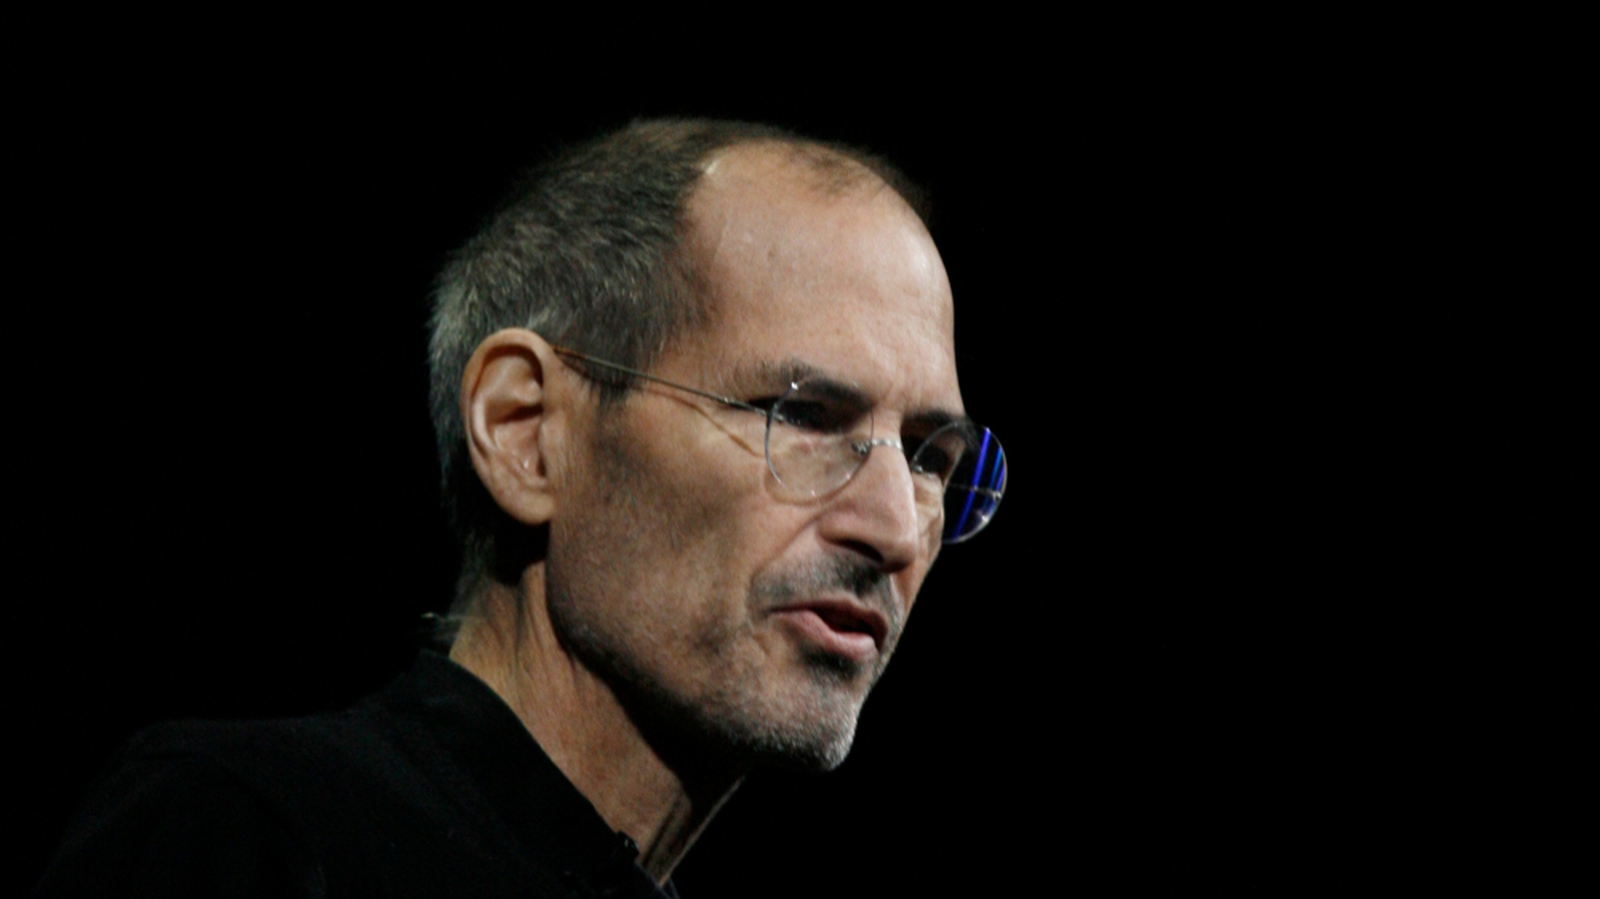 Tim Cook offered liver to save Steve Jobs